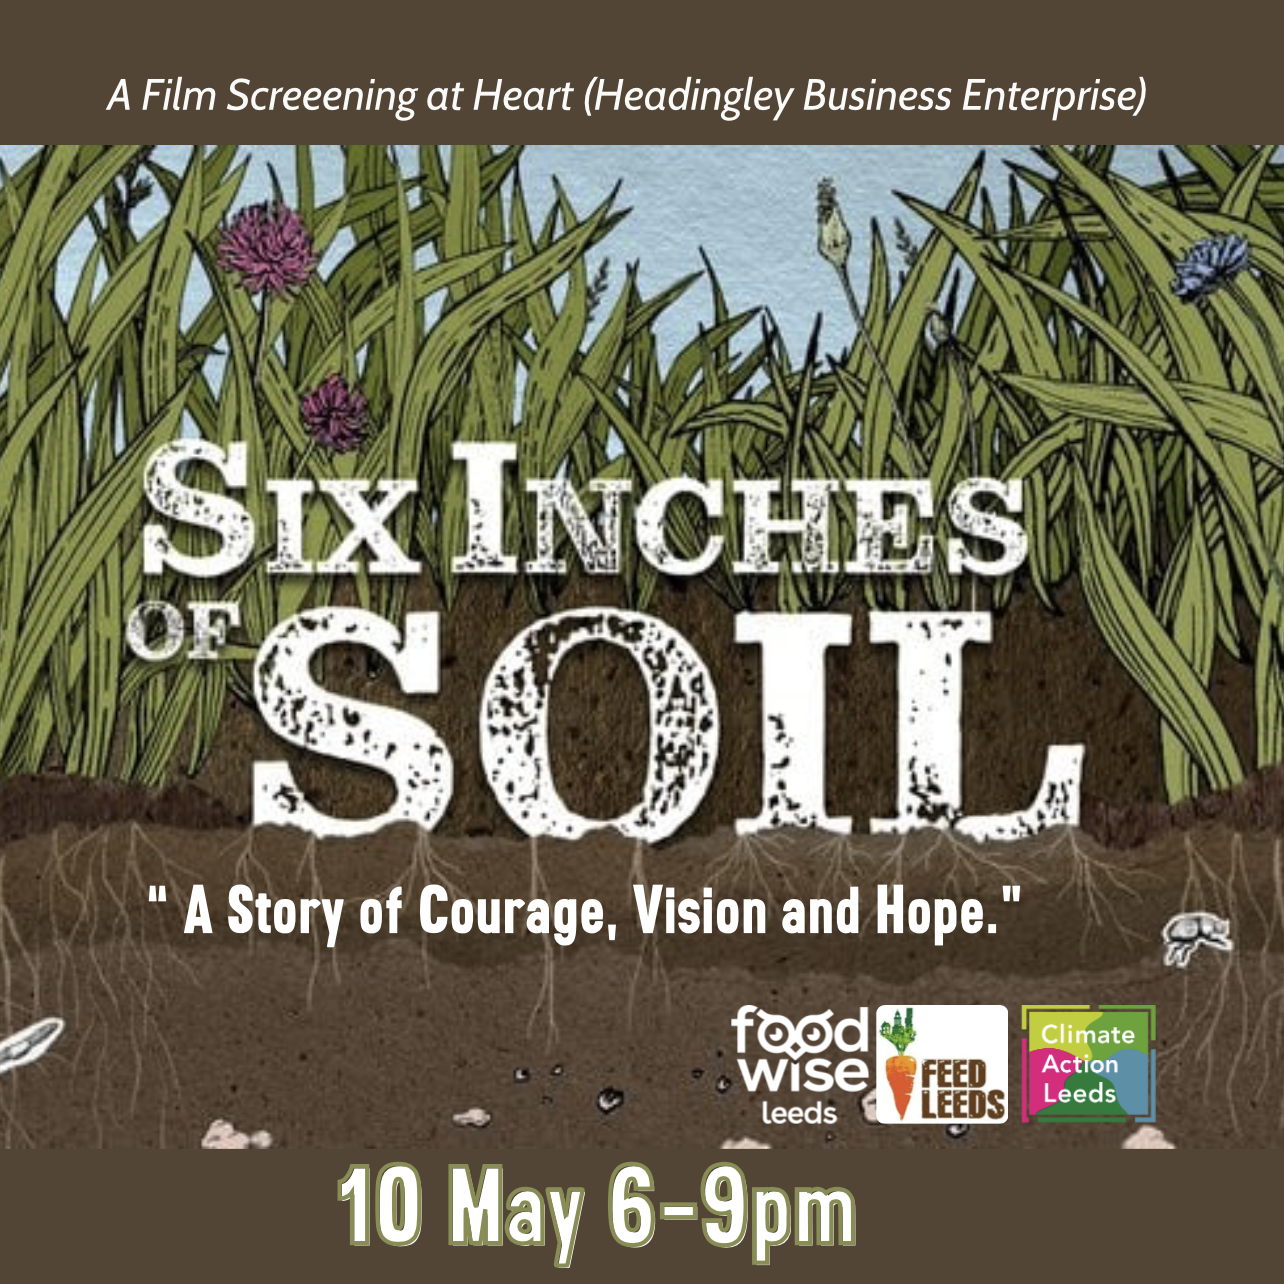 Film Screening: Six Inches of Soil